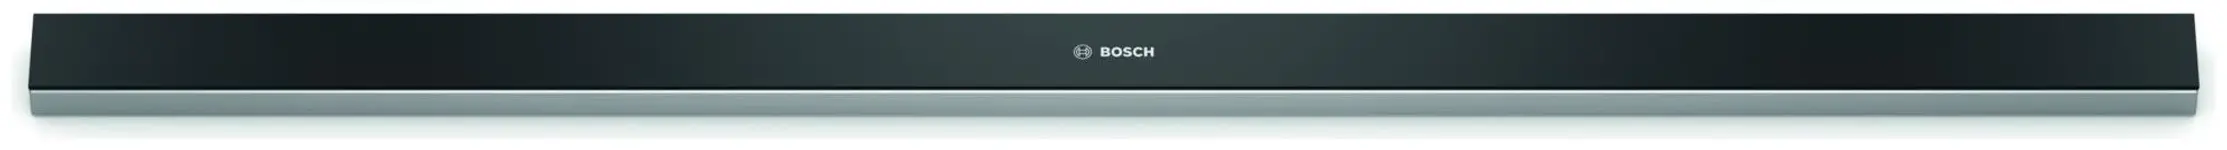 BOSCH-DSZ4986-Afzuigkap accessoires